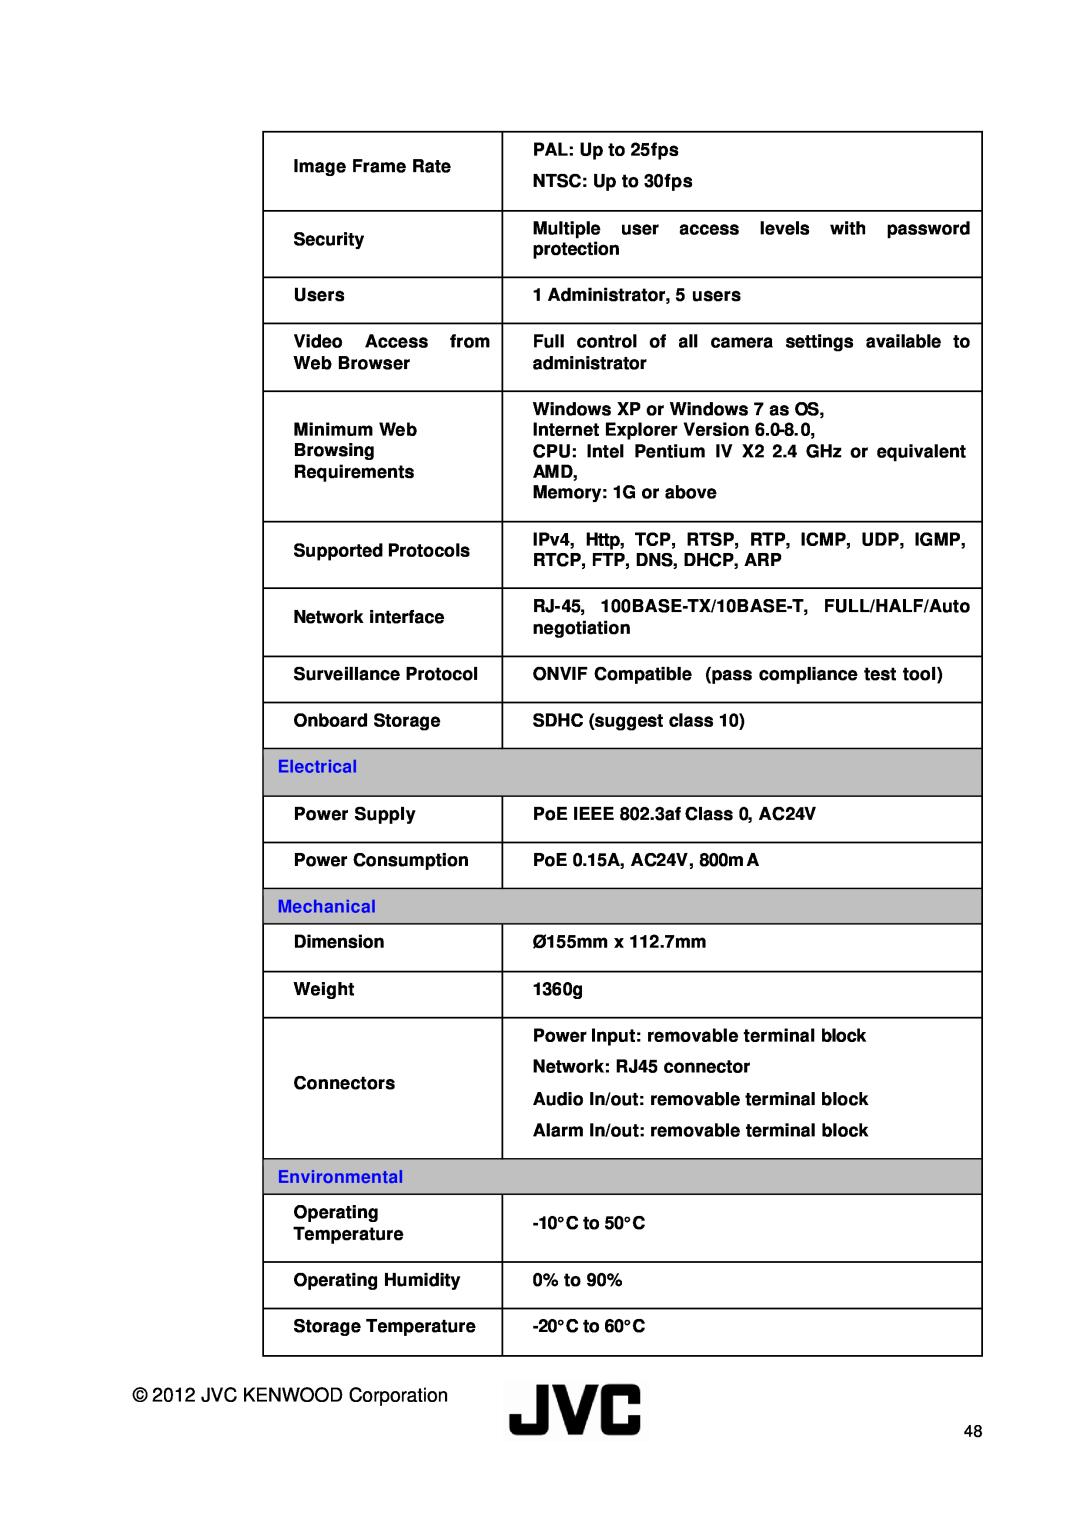 JVC VN-T216VPRU manual JVC KENWOOD Corporation, Electrical, Mechanical, Environmental 